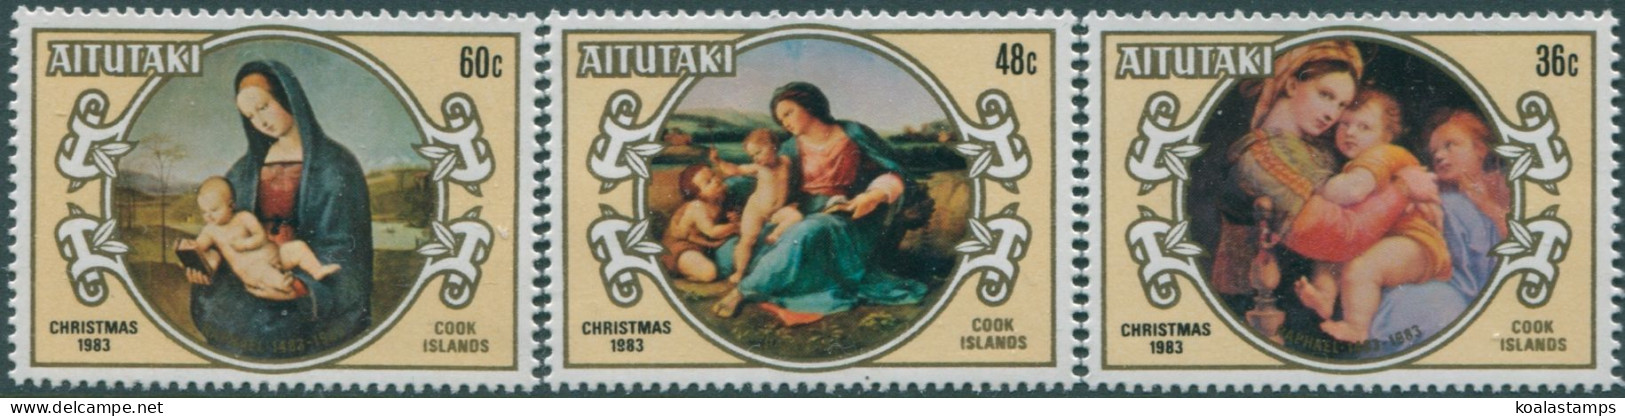 Aitutaki 1983 SG470-472 Christmas Set MNH - Cook Islands